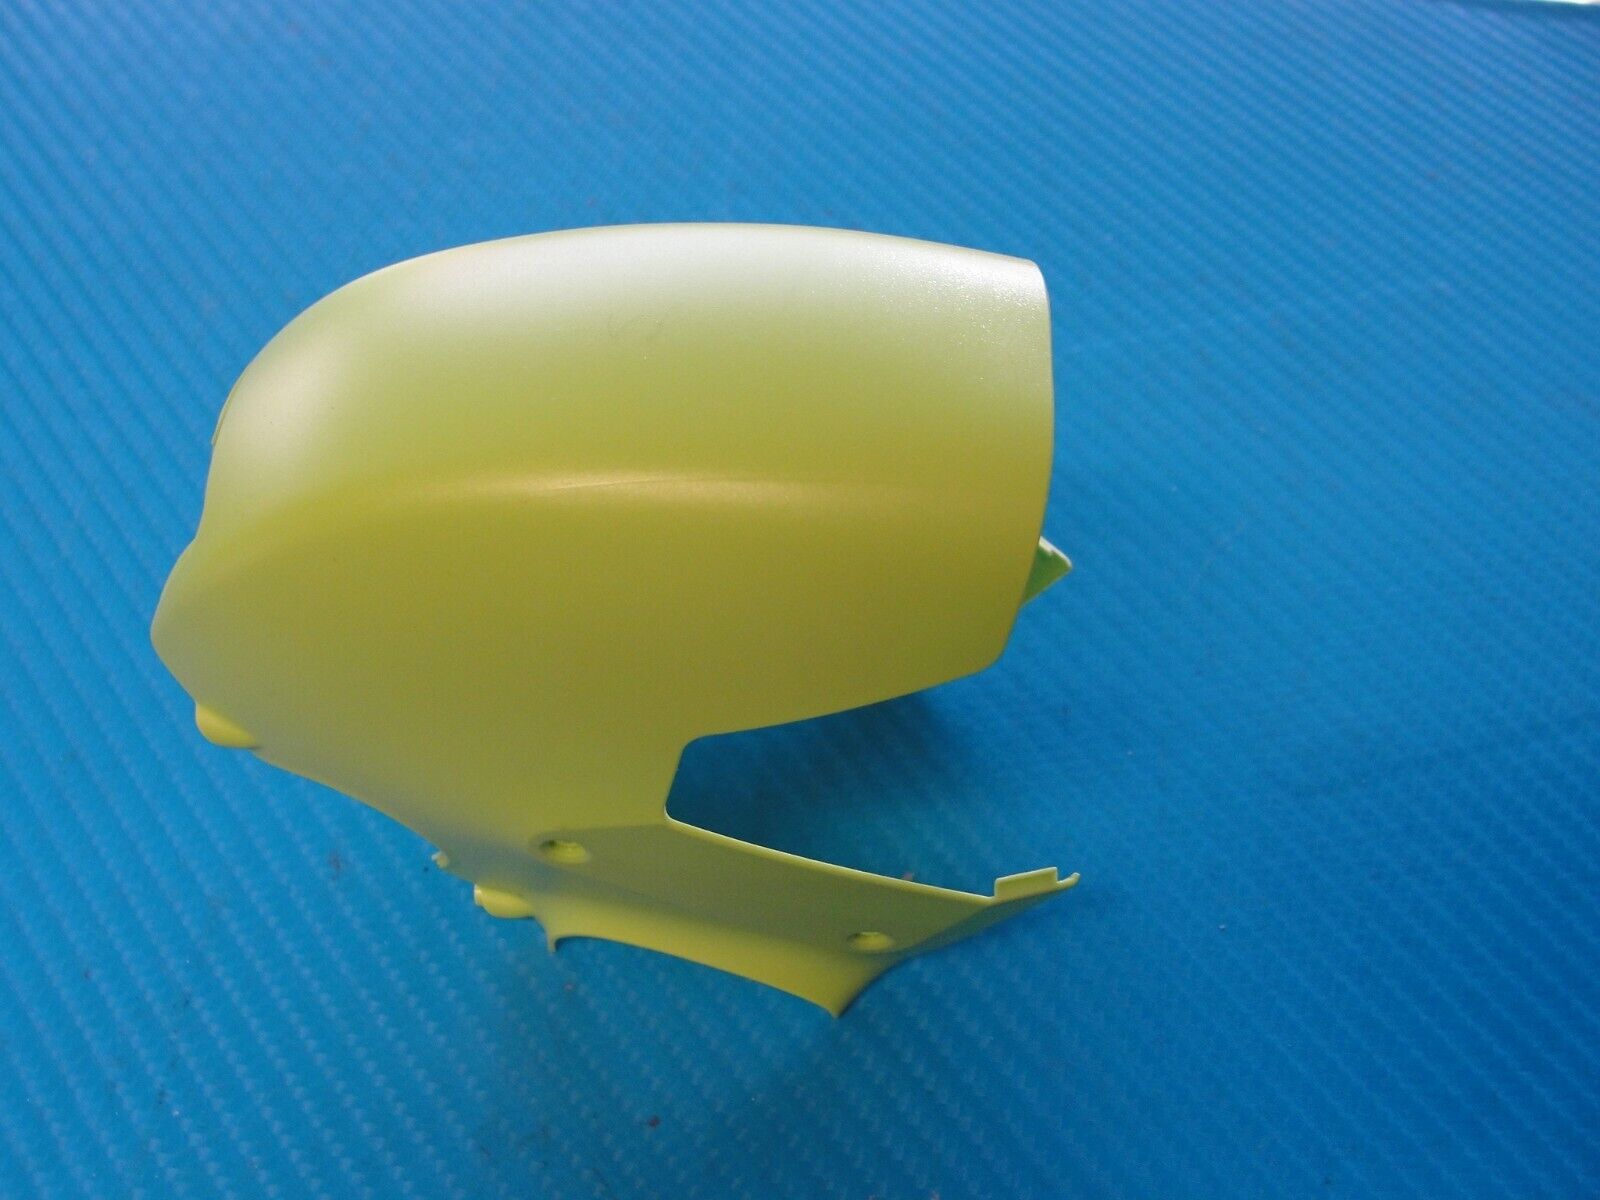 Genuine DJI FPV Drone Upper Shell Protective Cover Plastic Green/#2